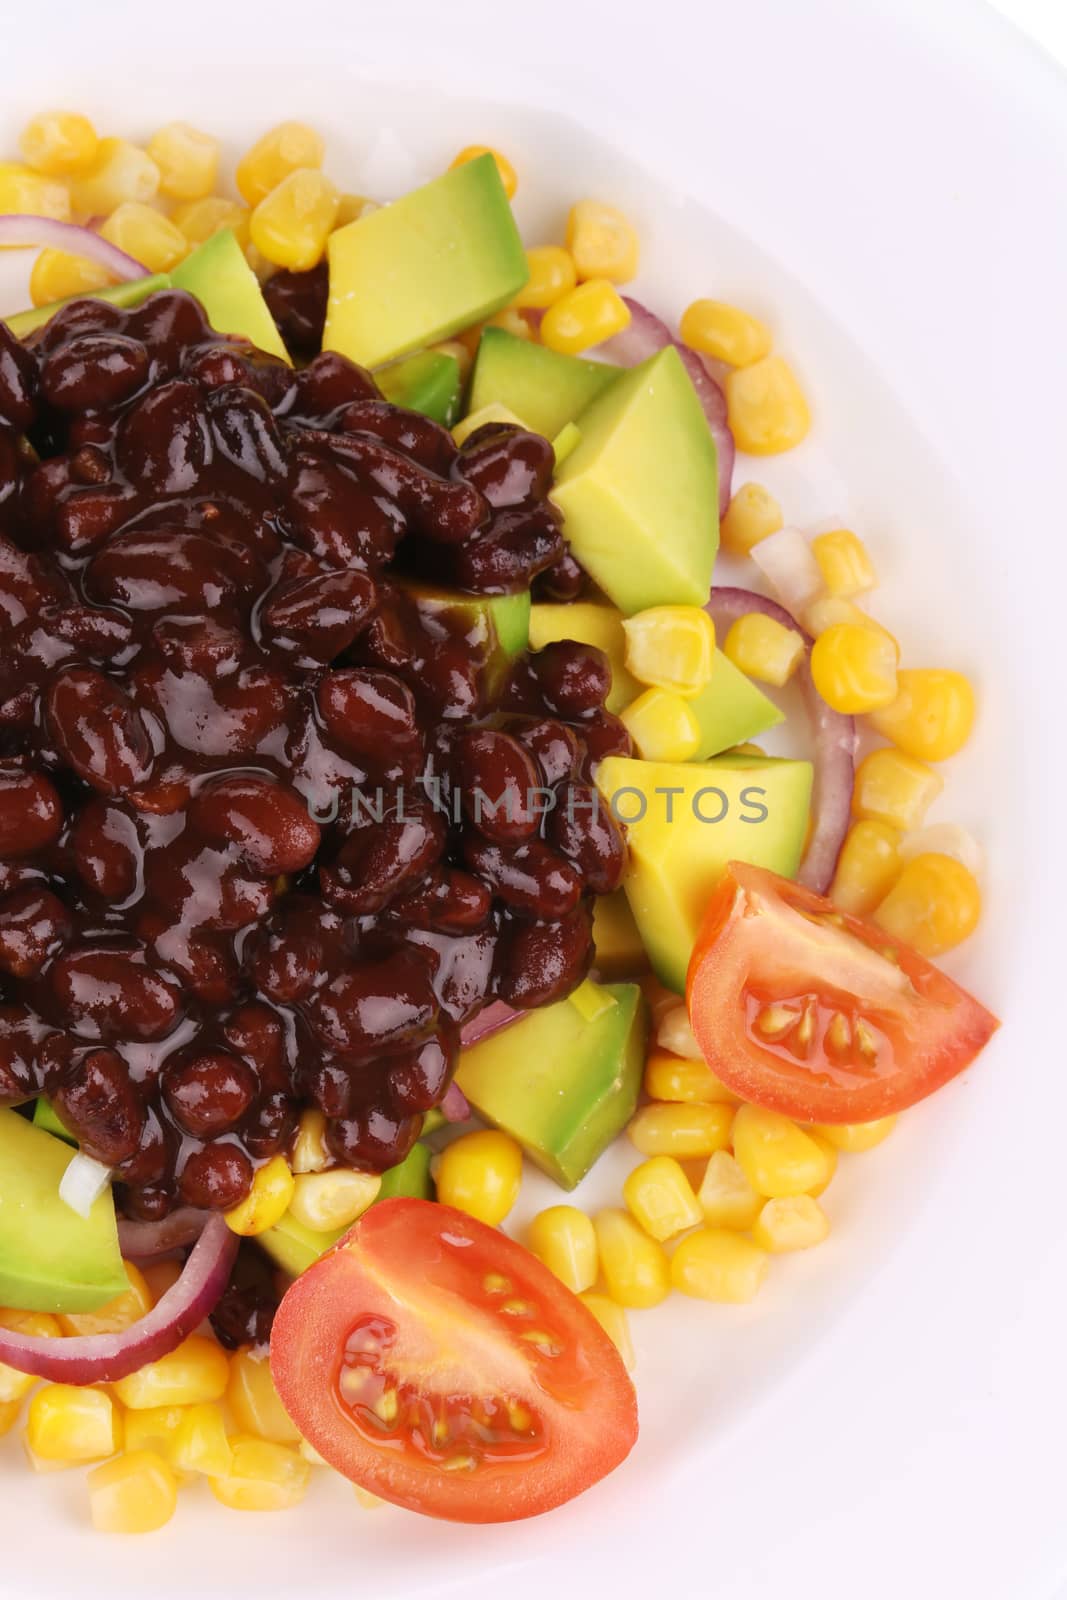 Close up of beans salad. by indigolotos